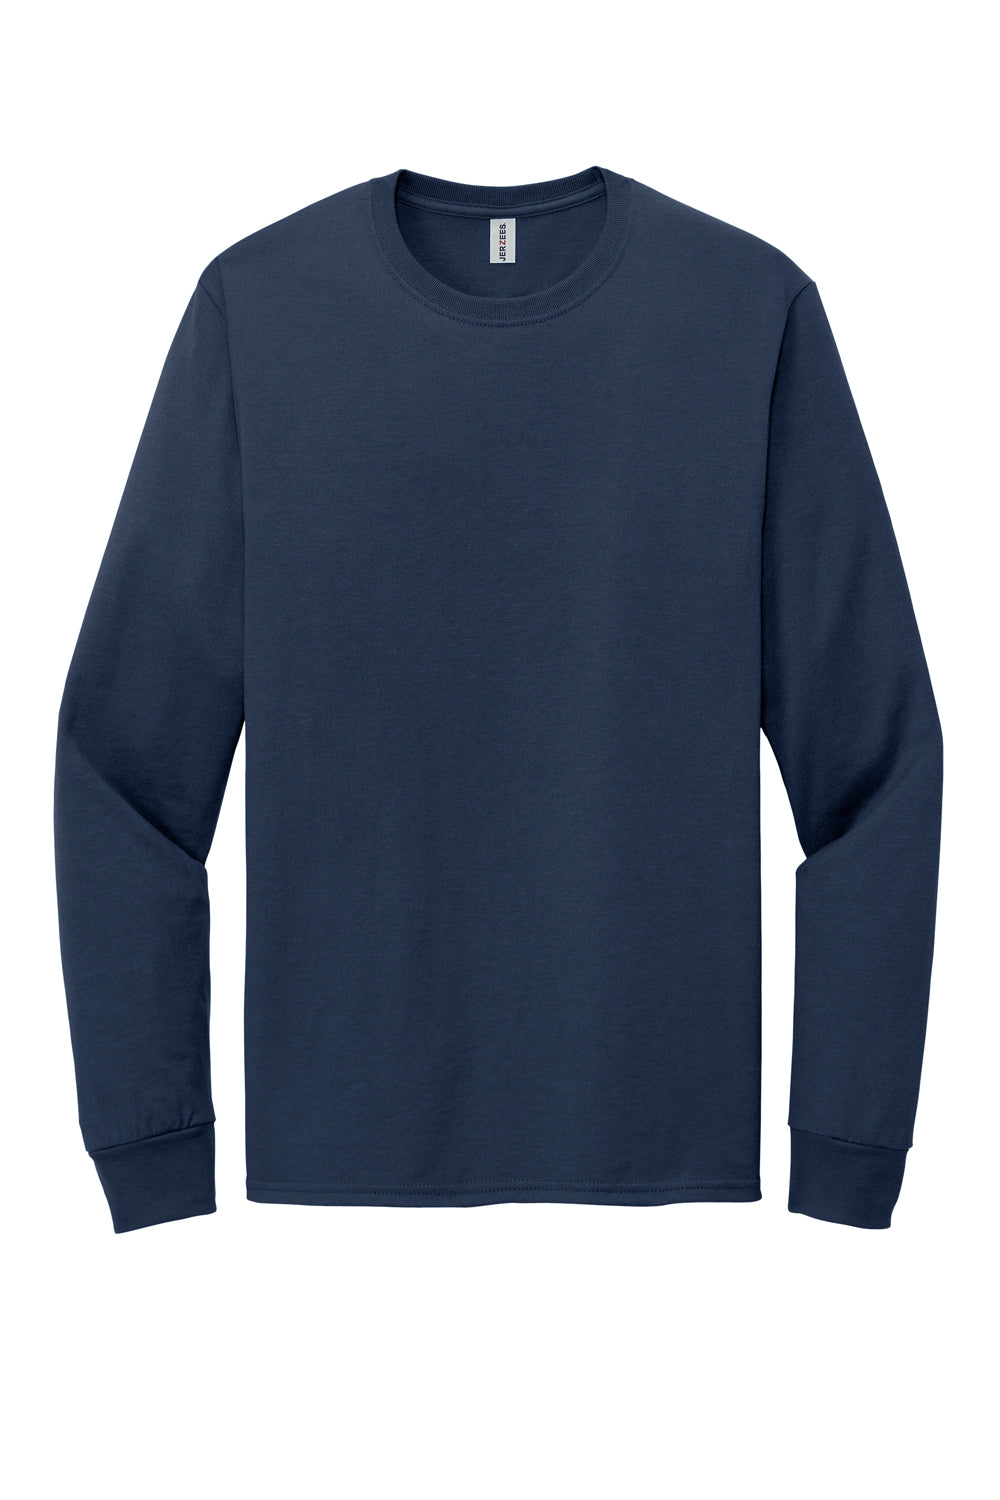 Jerzees 560LS Mens Premium Blend Ring Spun Long Sleeve Crewneck T-Shirt Navy Blue Flat Front